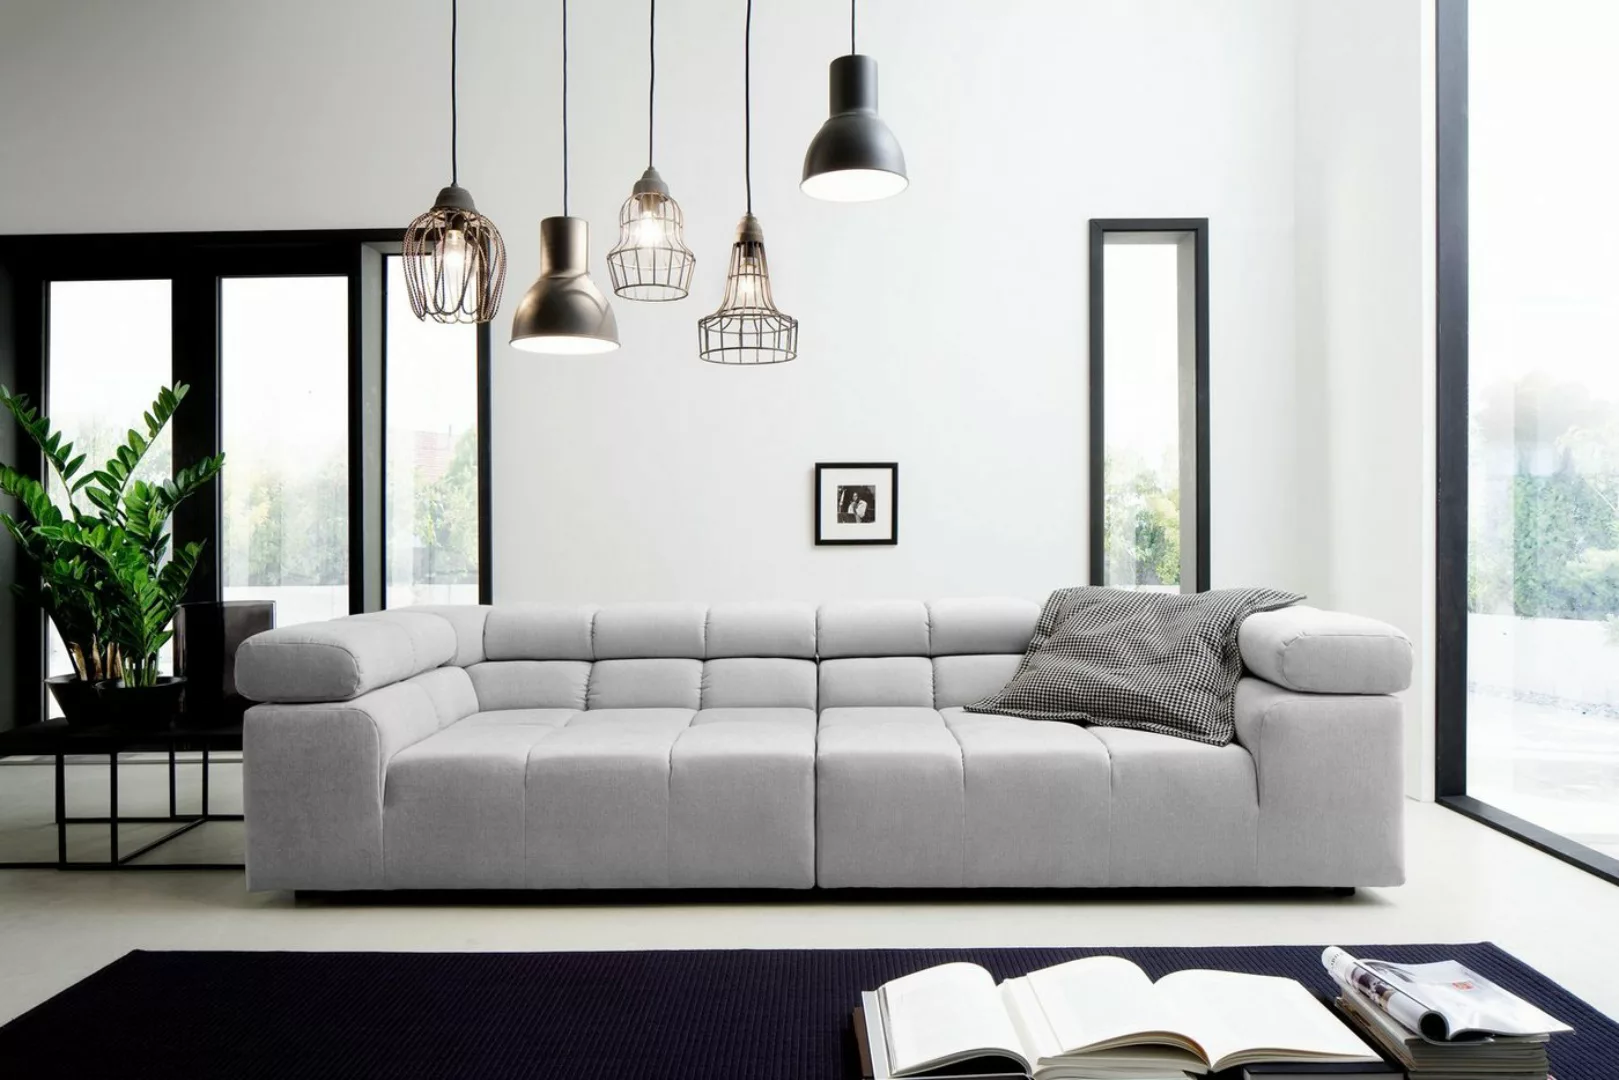 INOSIGN Big-Sofa Ancona B/T/H: 290/110/70 cm, auffällige Steppung, inkl. 2 günstig online kaufen